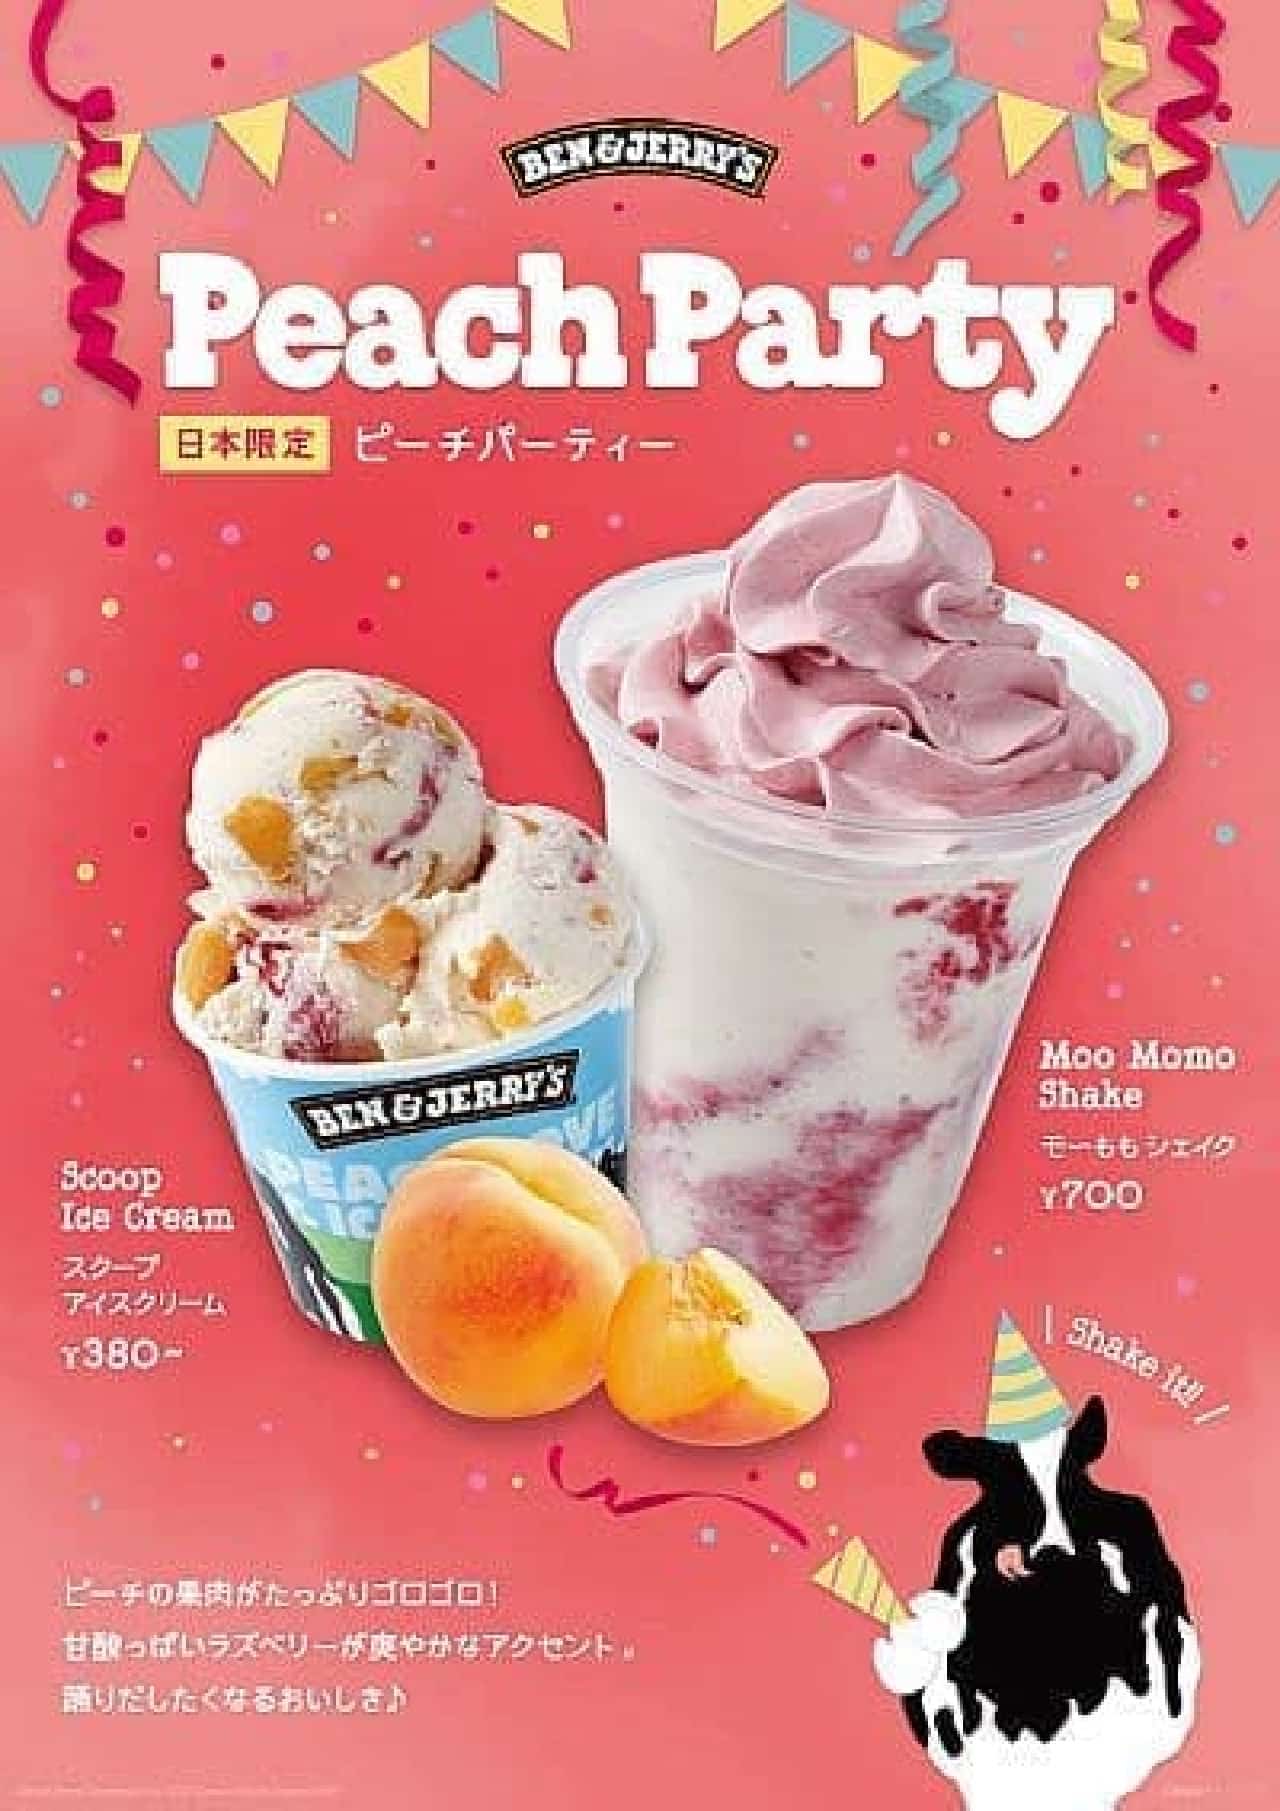 Ben & Jerry's "Peach Party" "Momo Shake"